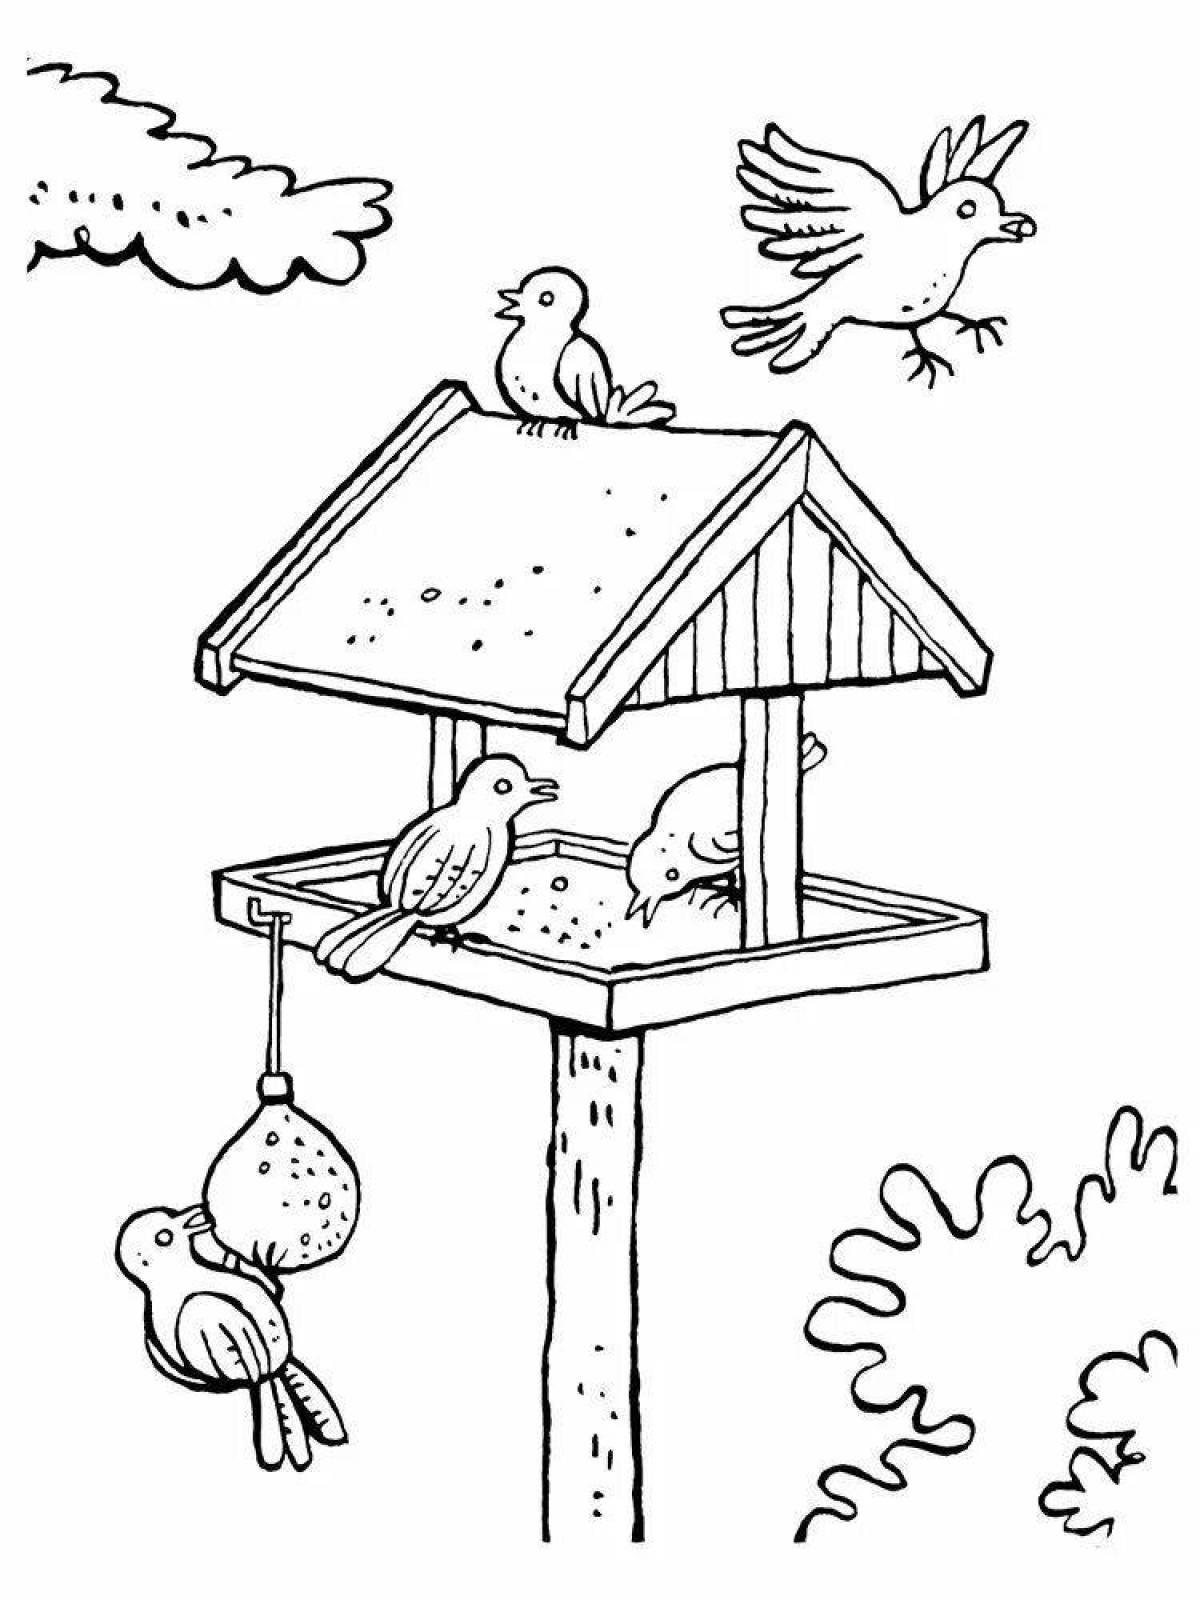 Inspiring bird feeder coloring book for kids in winter